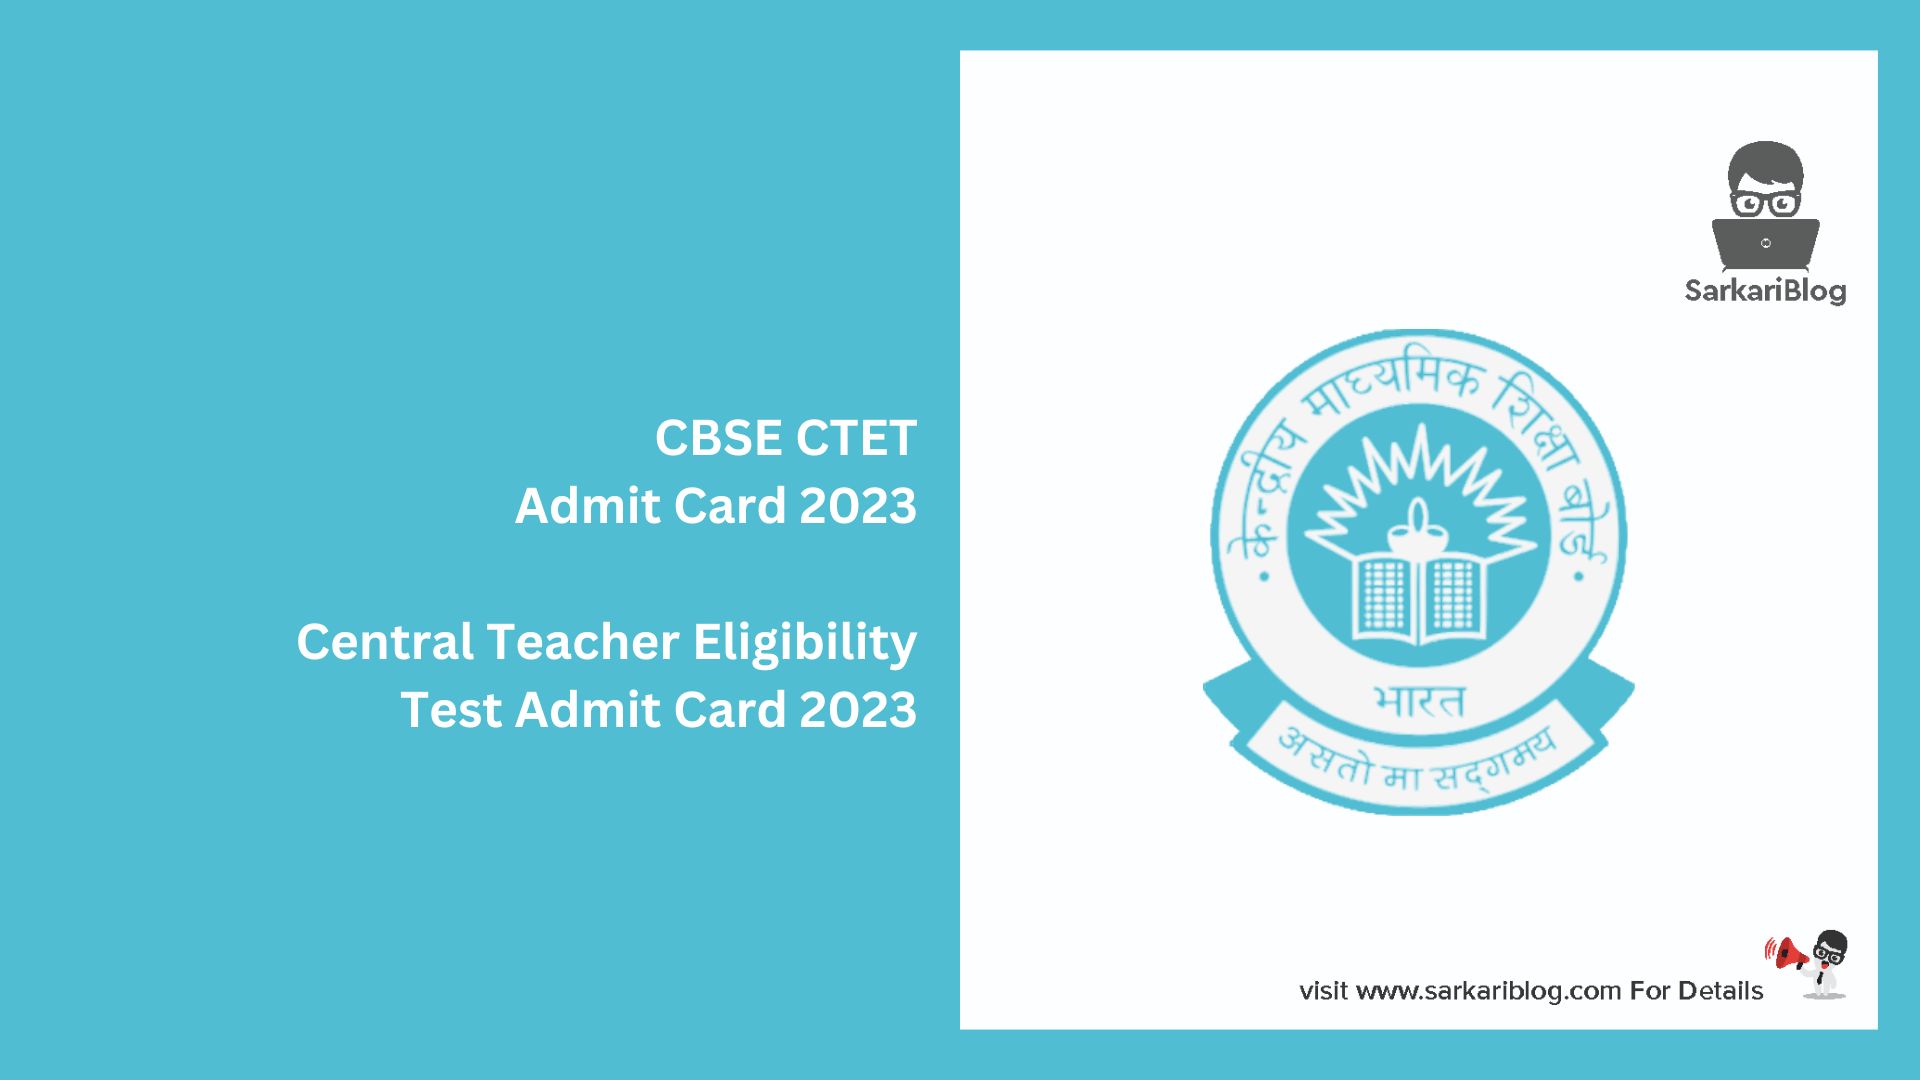 CBSE CTET Admit Card 2023